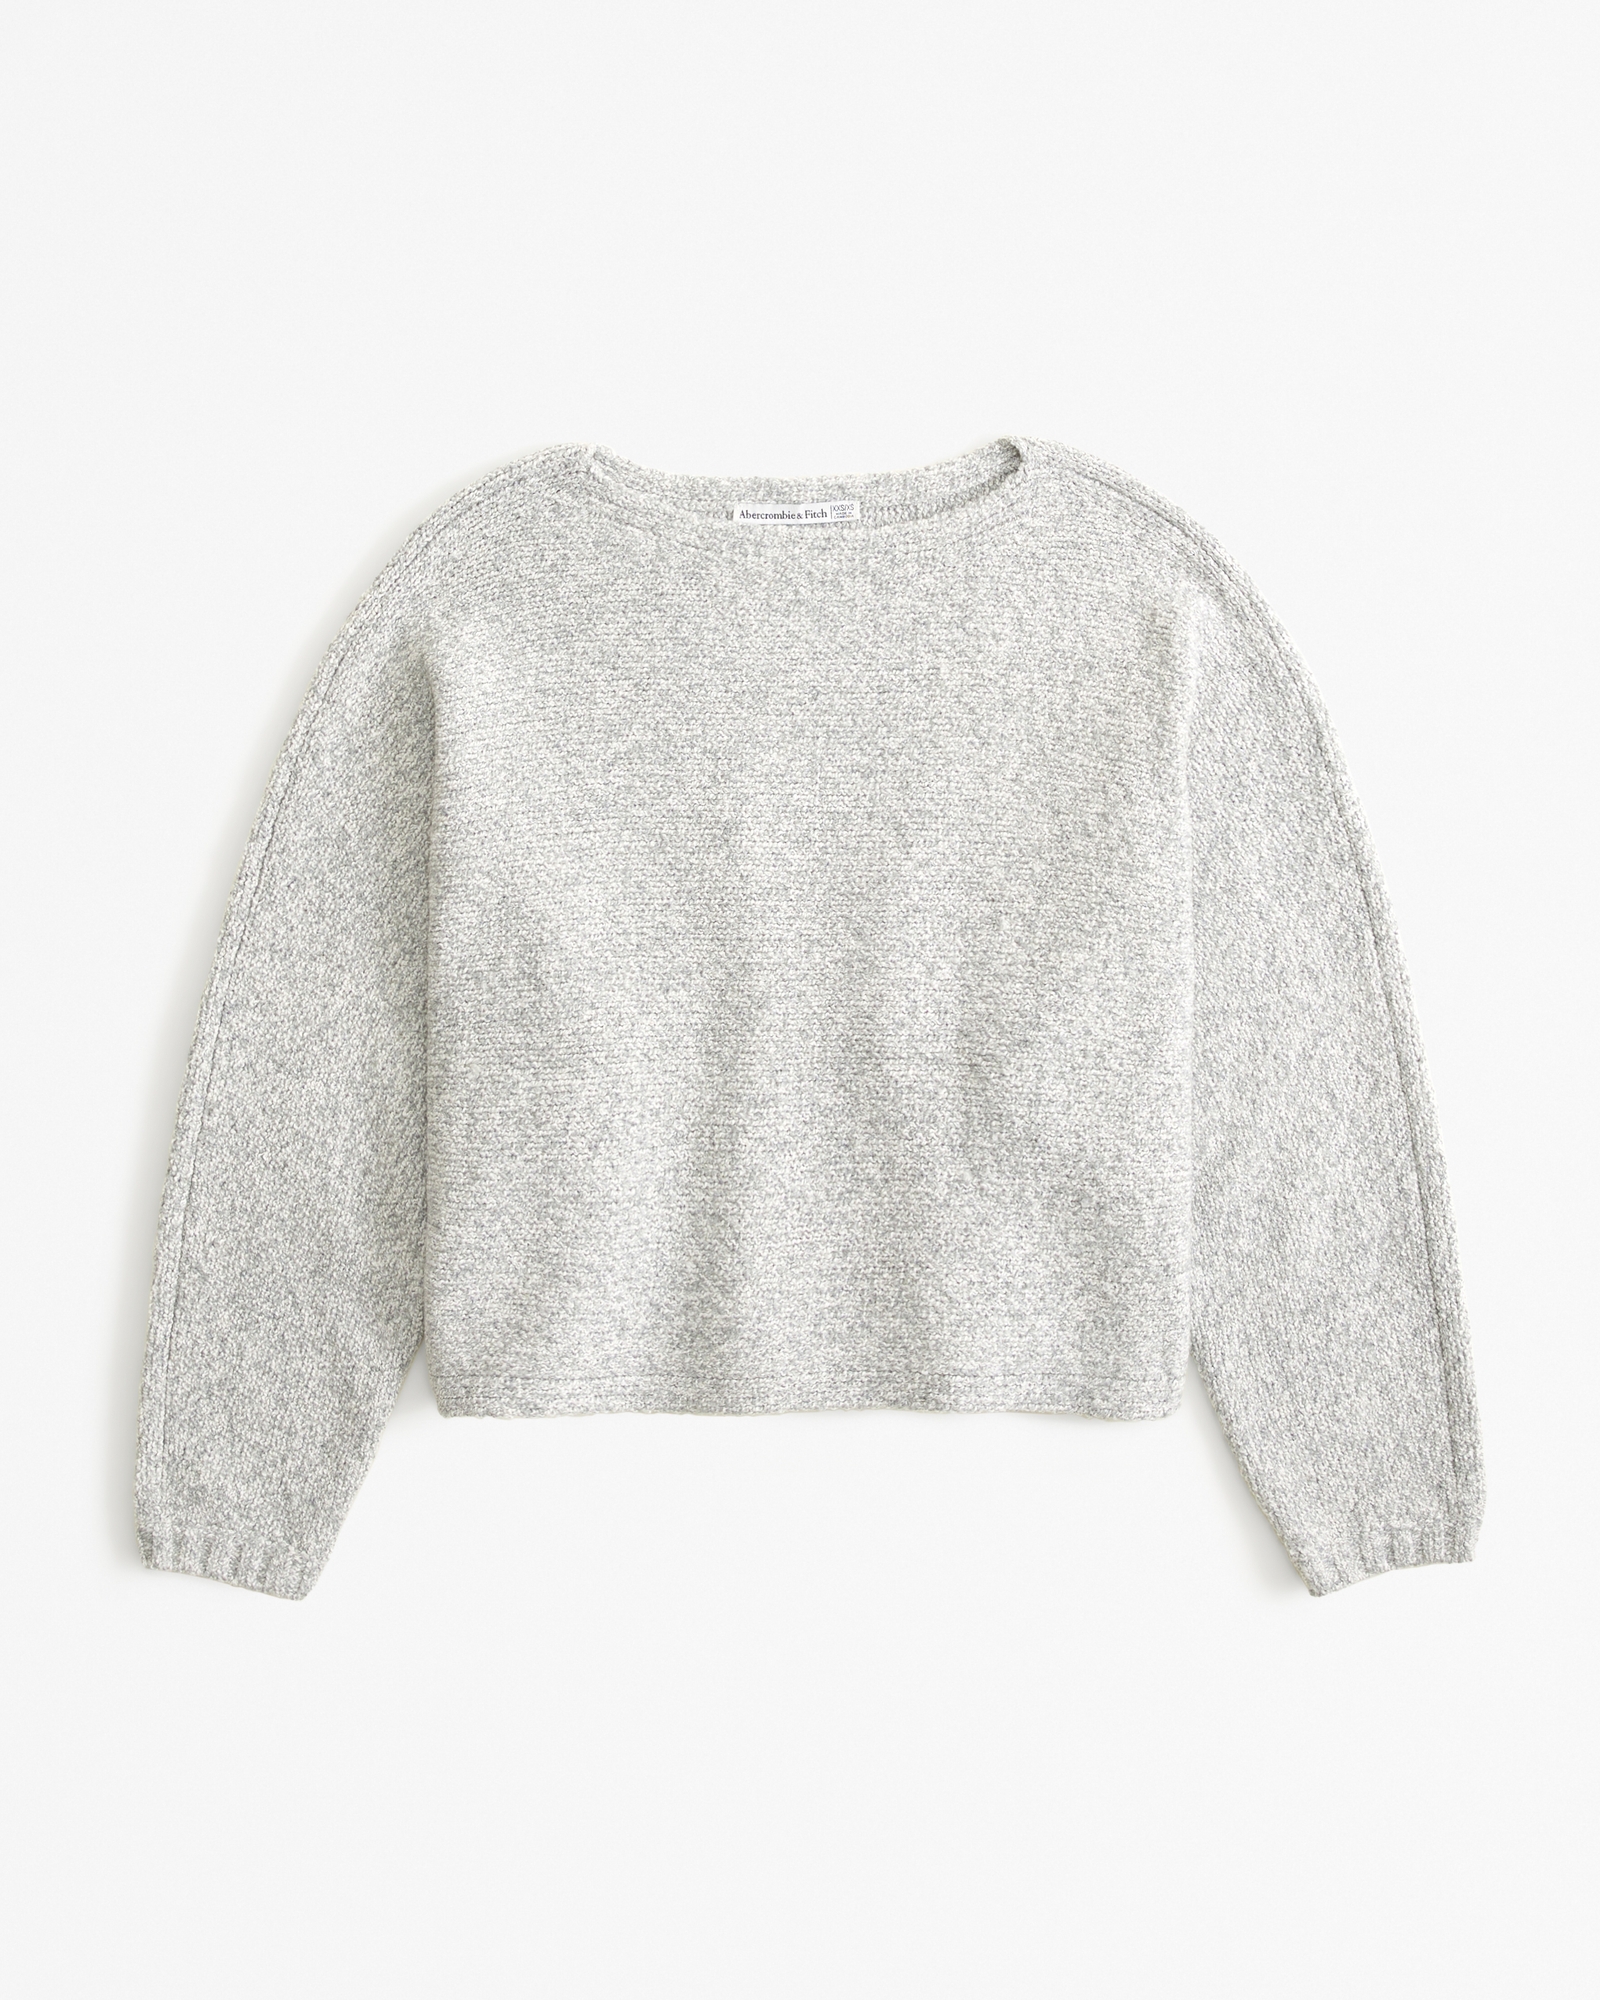 Slash Dolman Sweater